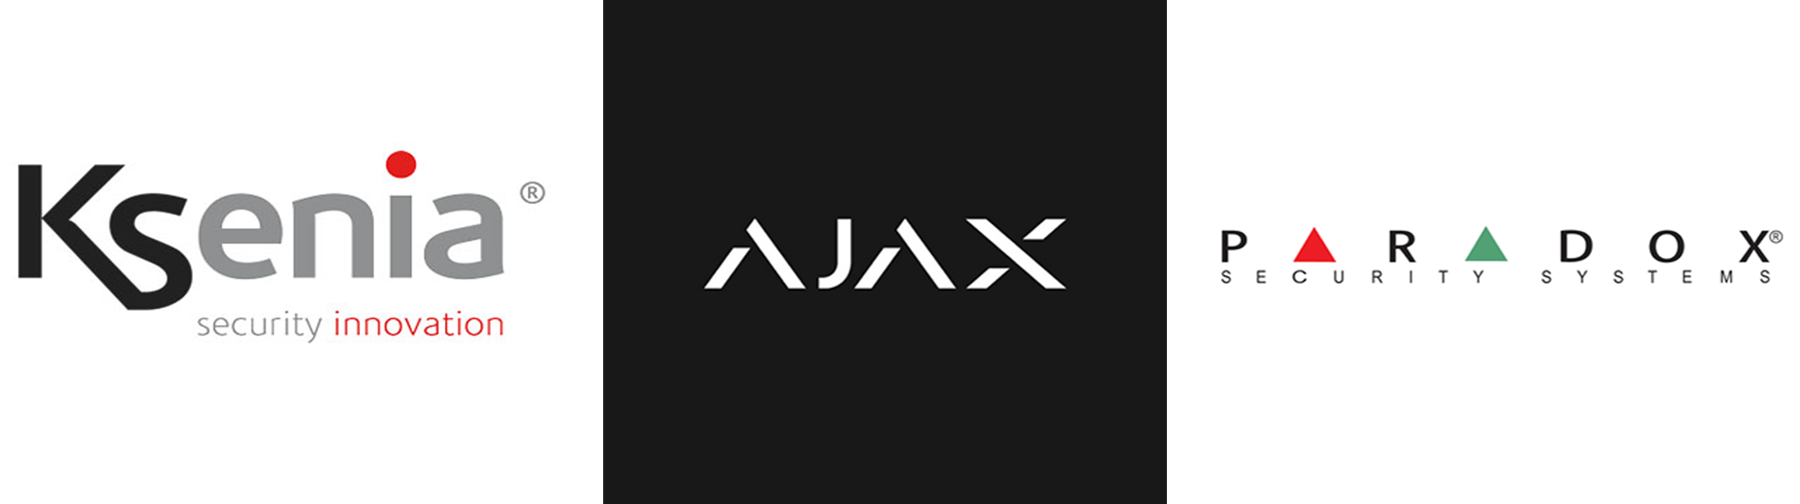 Ajax - Ksenia - Paradox